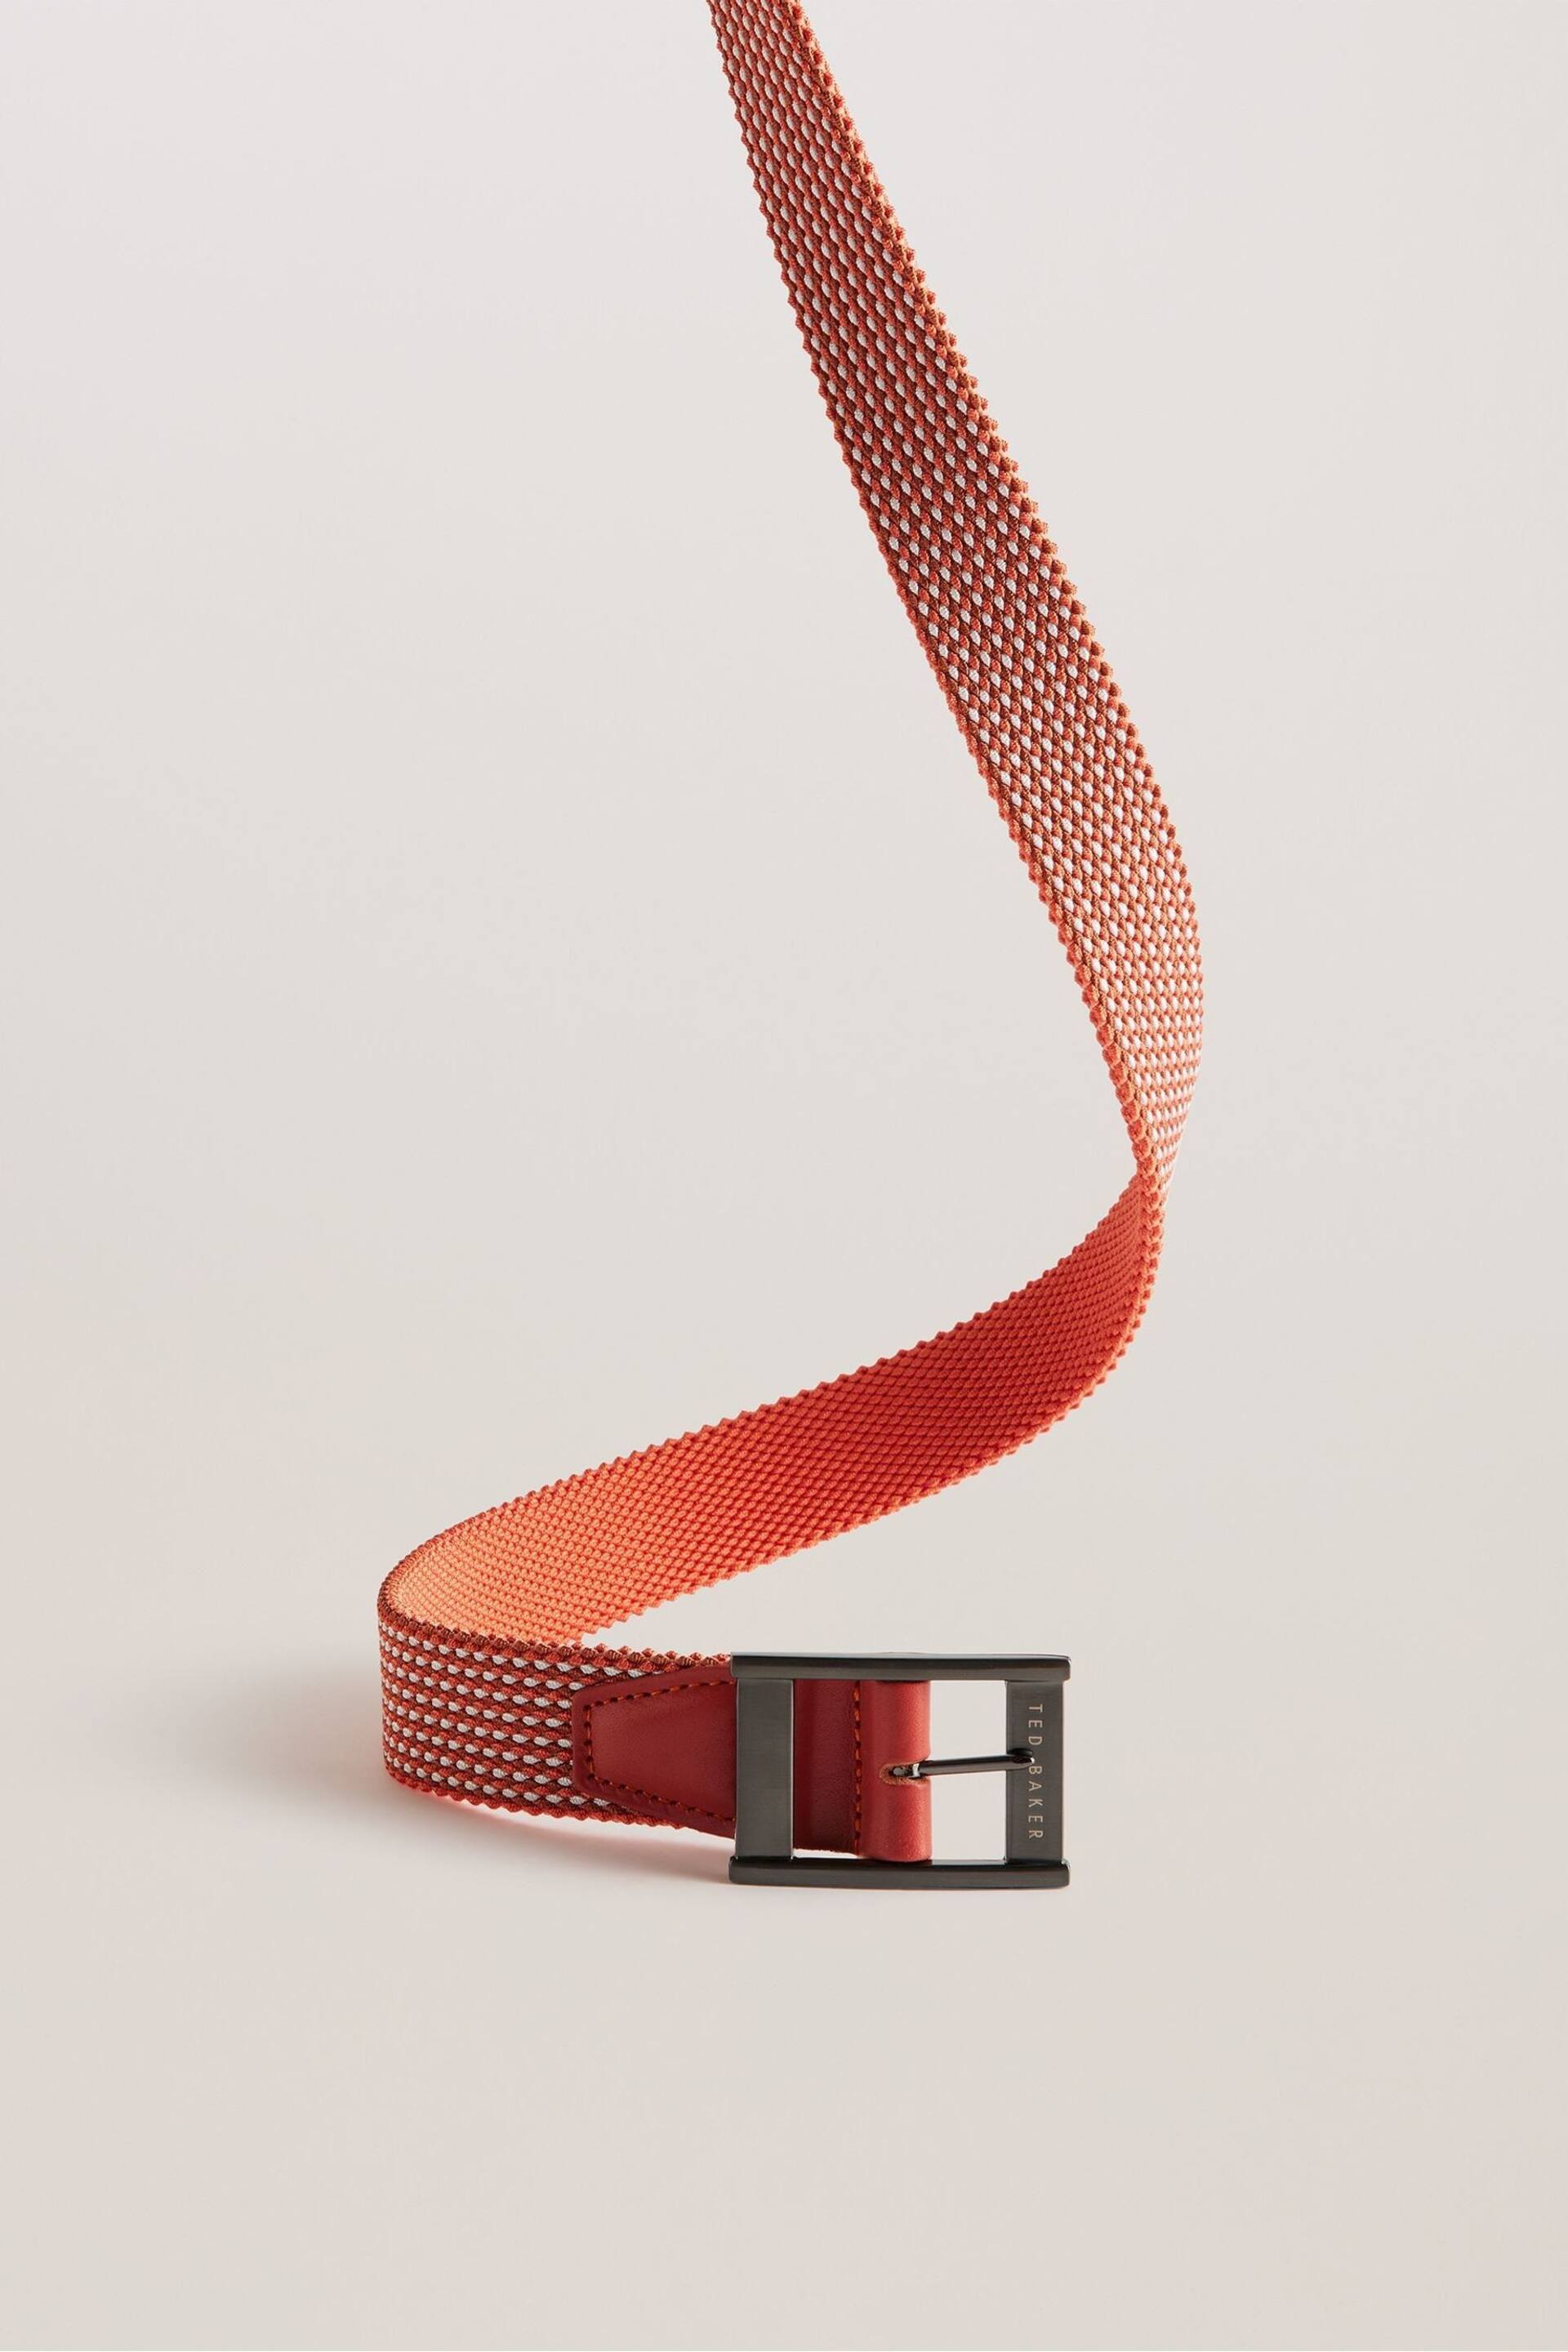 Ted Baker Orange Colummm Reversible Elastic Belt - Image 4 of 4